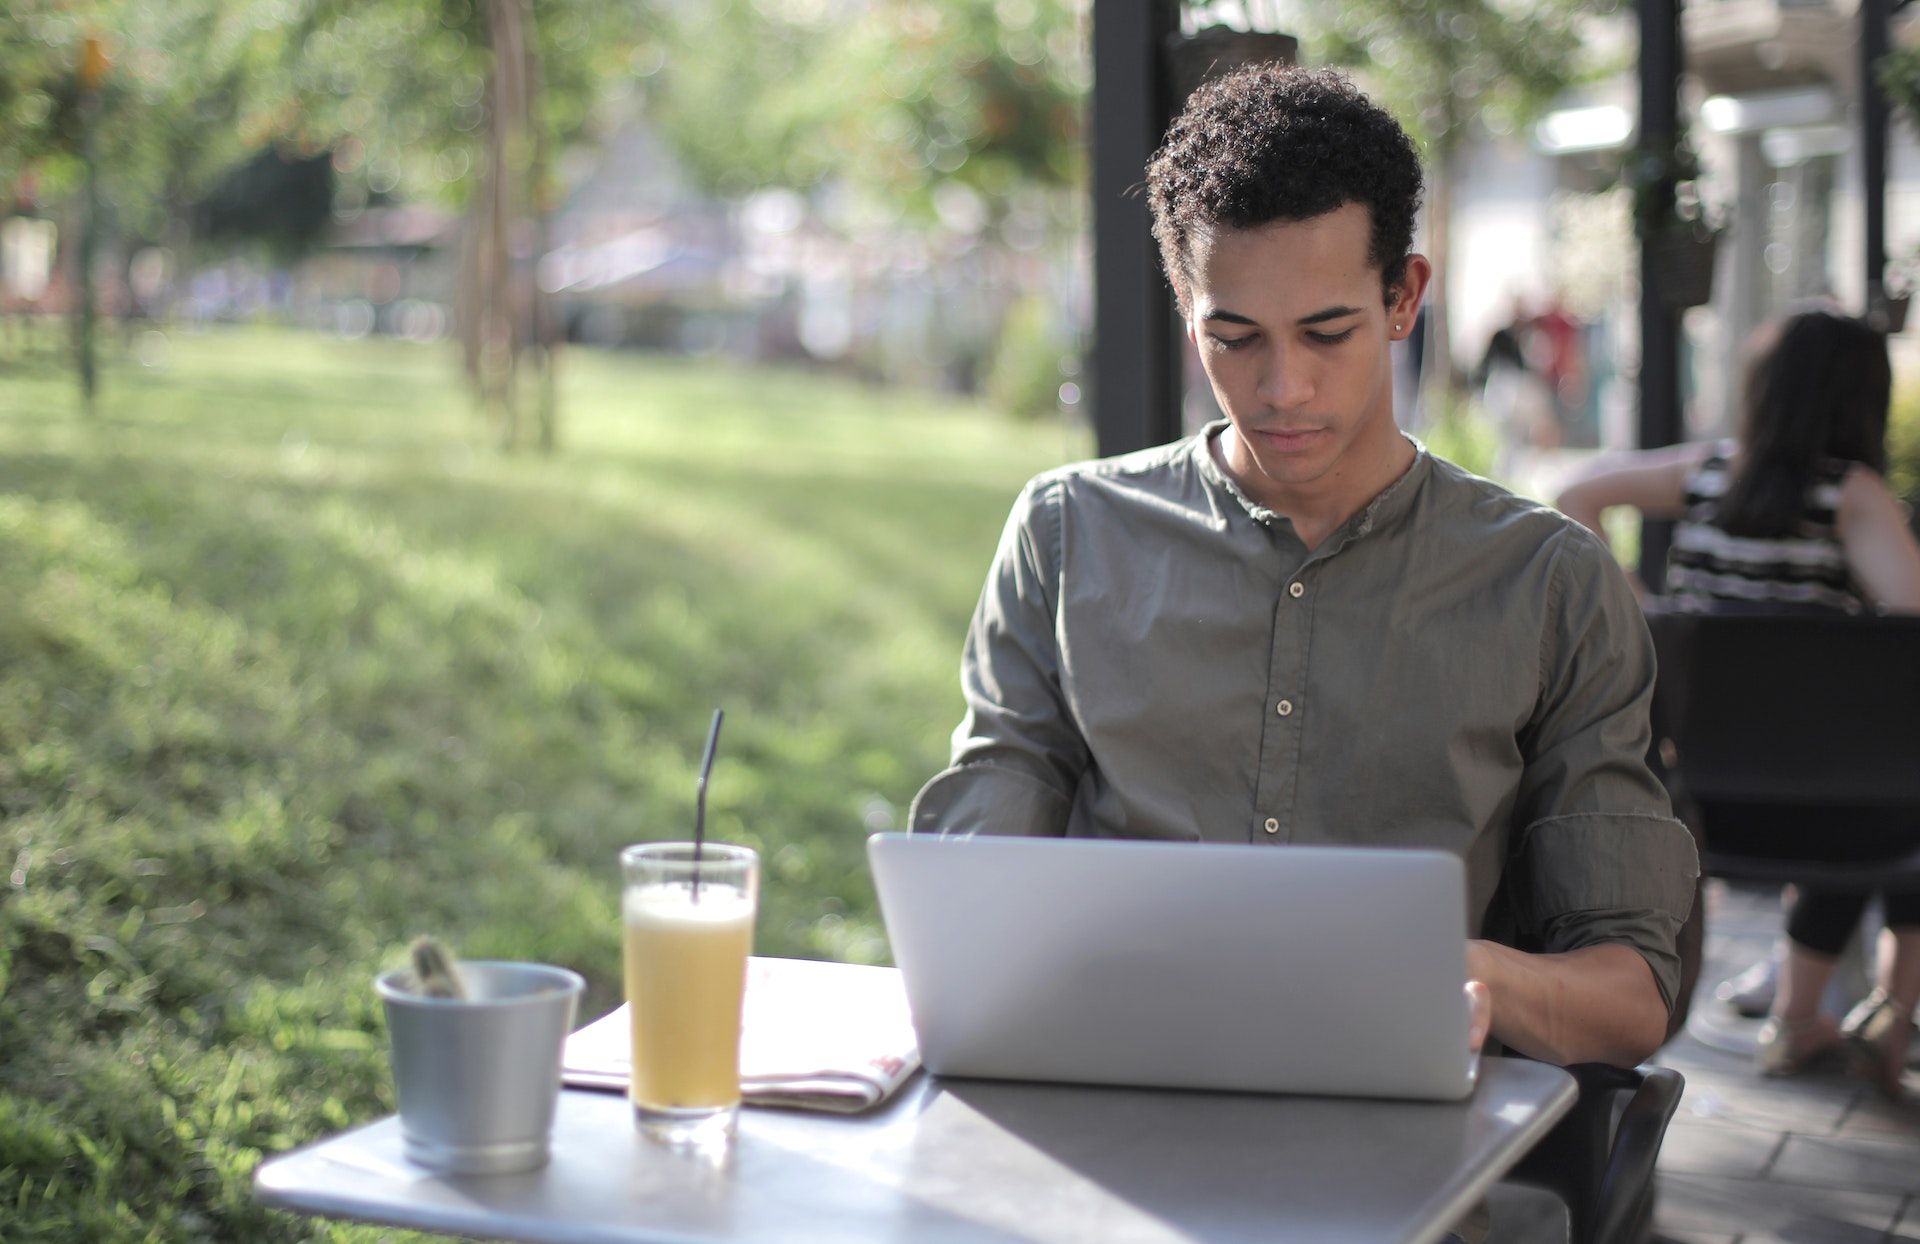 Focused man using a laptop